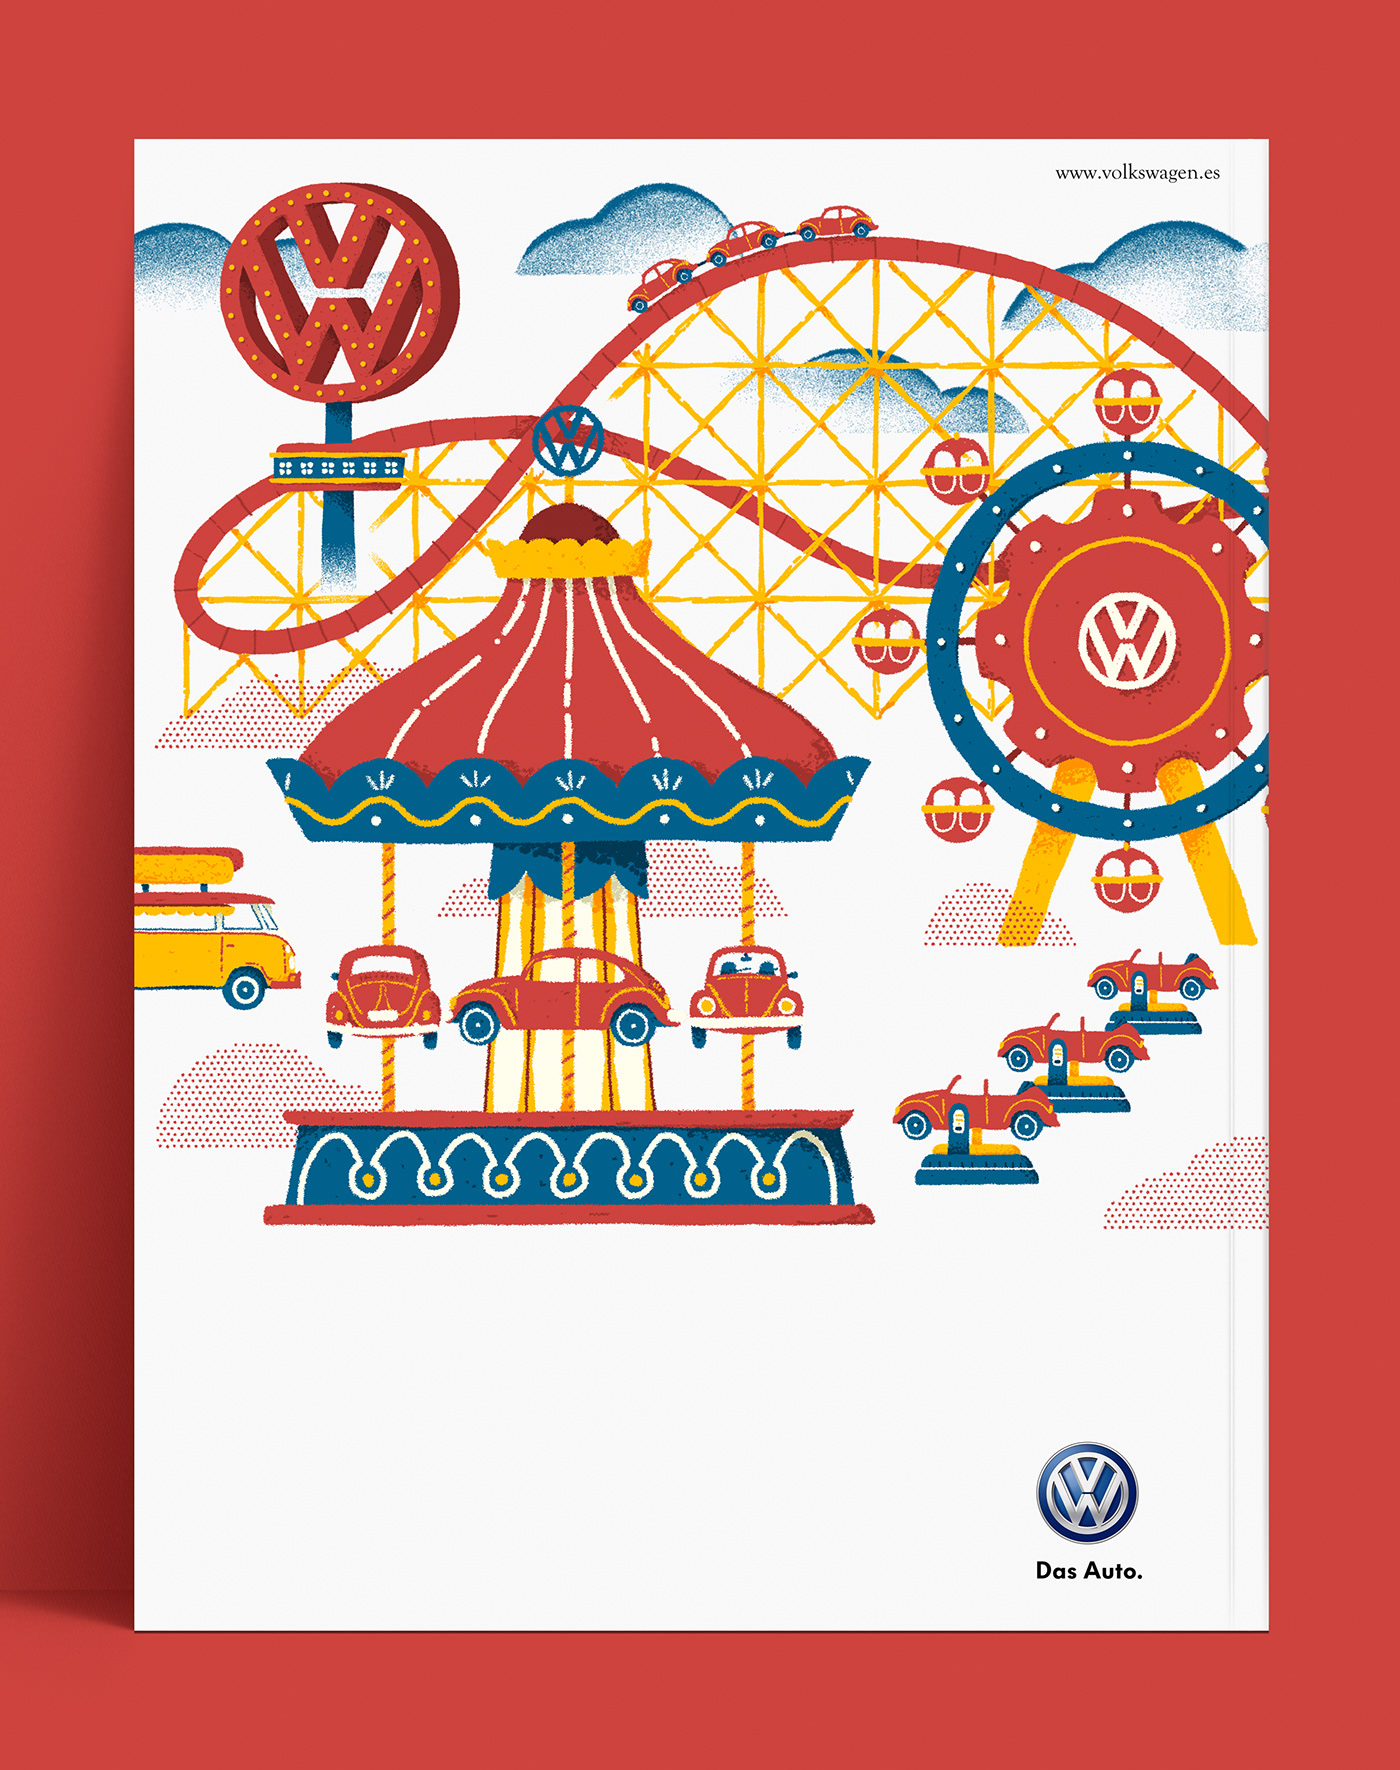 yorokobu magazine volkswagen cover editorial fairground funfair big wheel roller coaster ride caroussel helter skelter sign lettering type